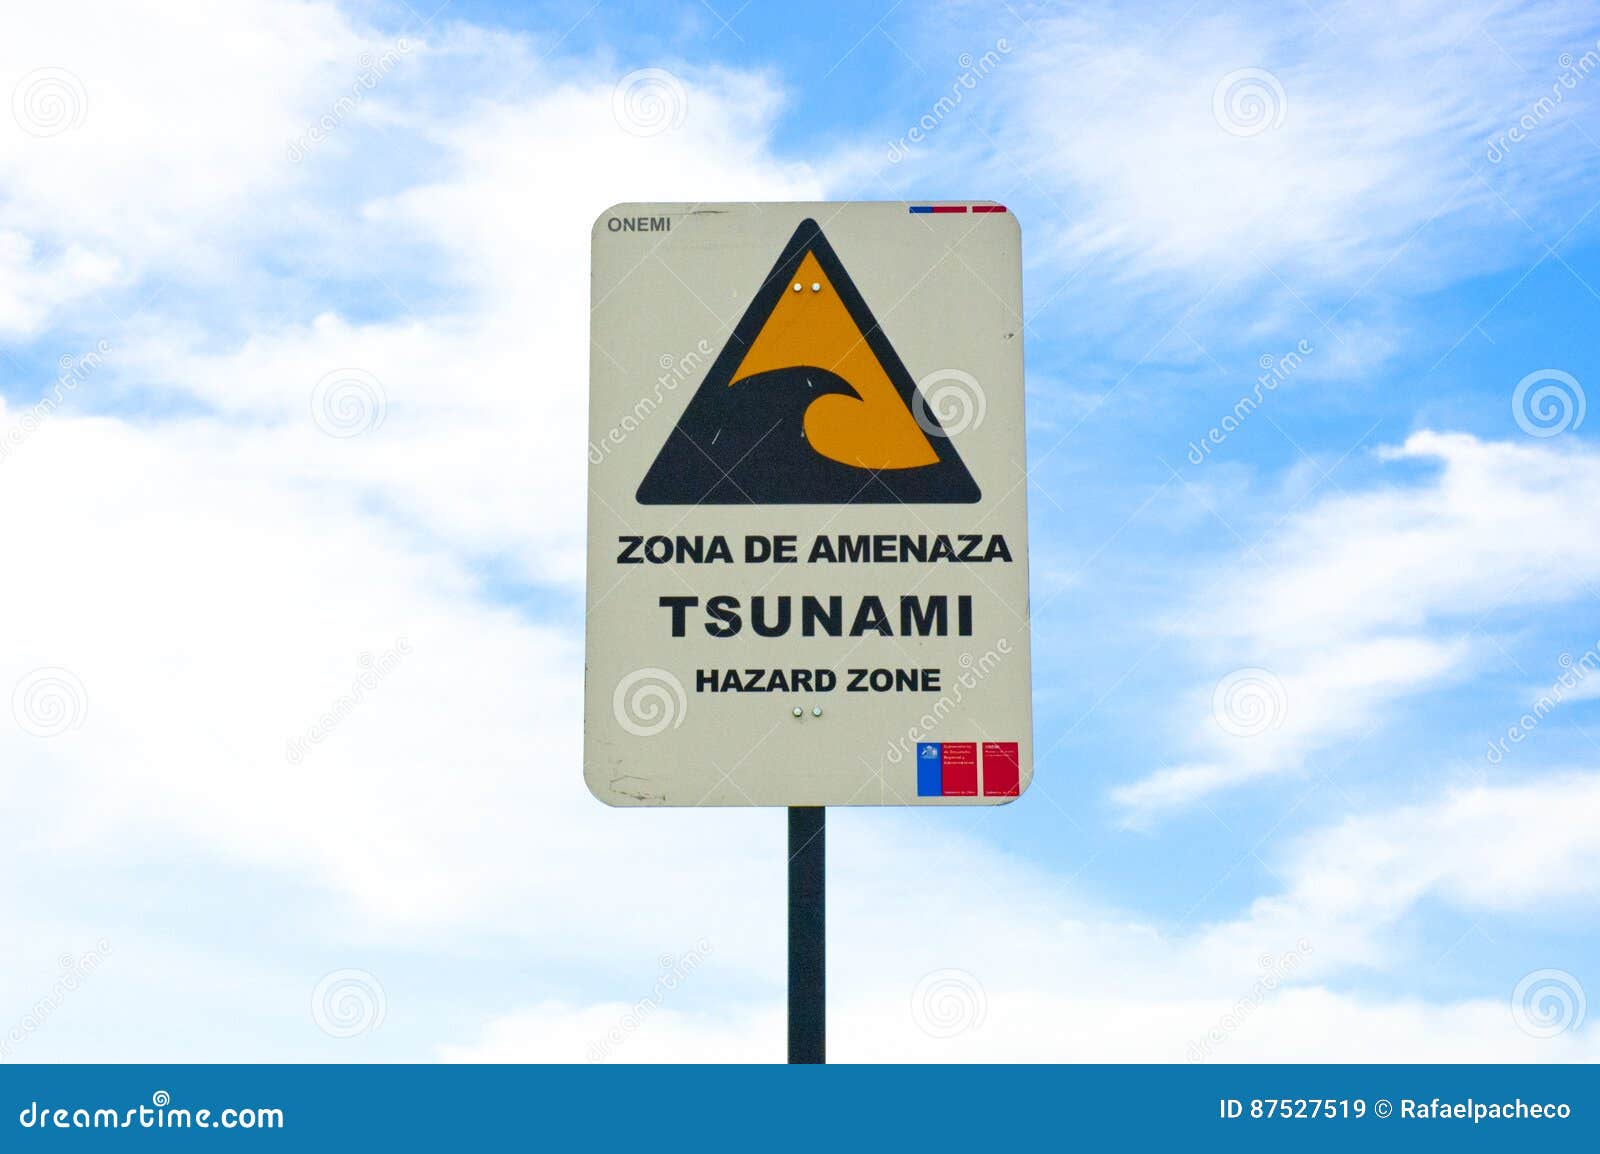 tsunami sign - zona de amenaza